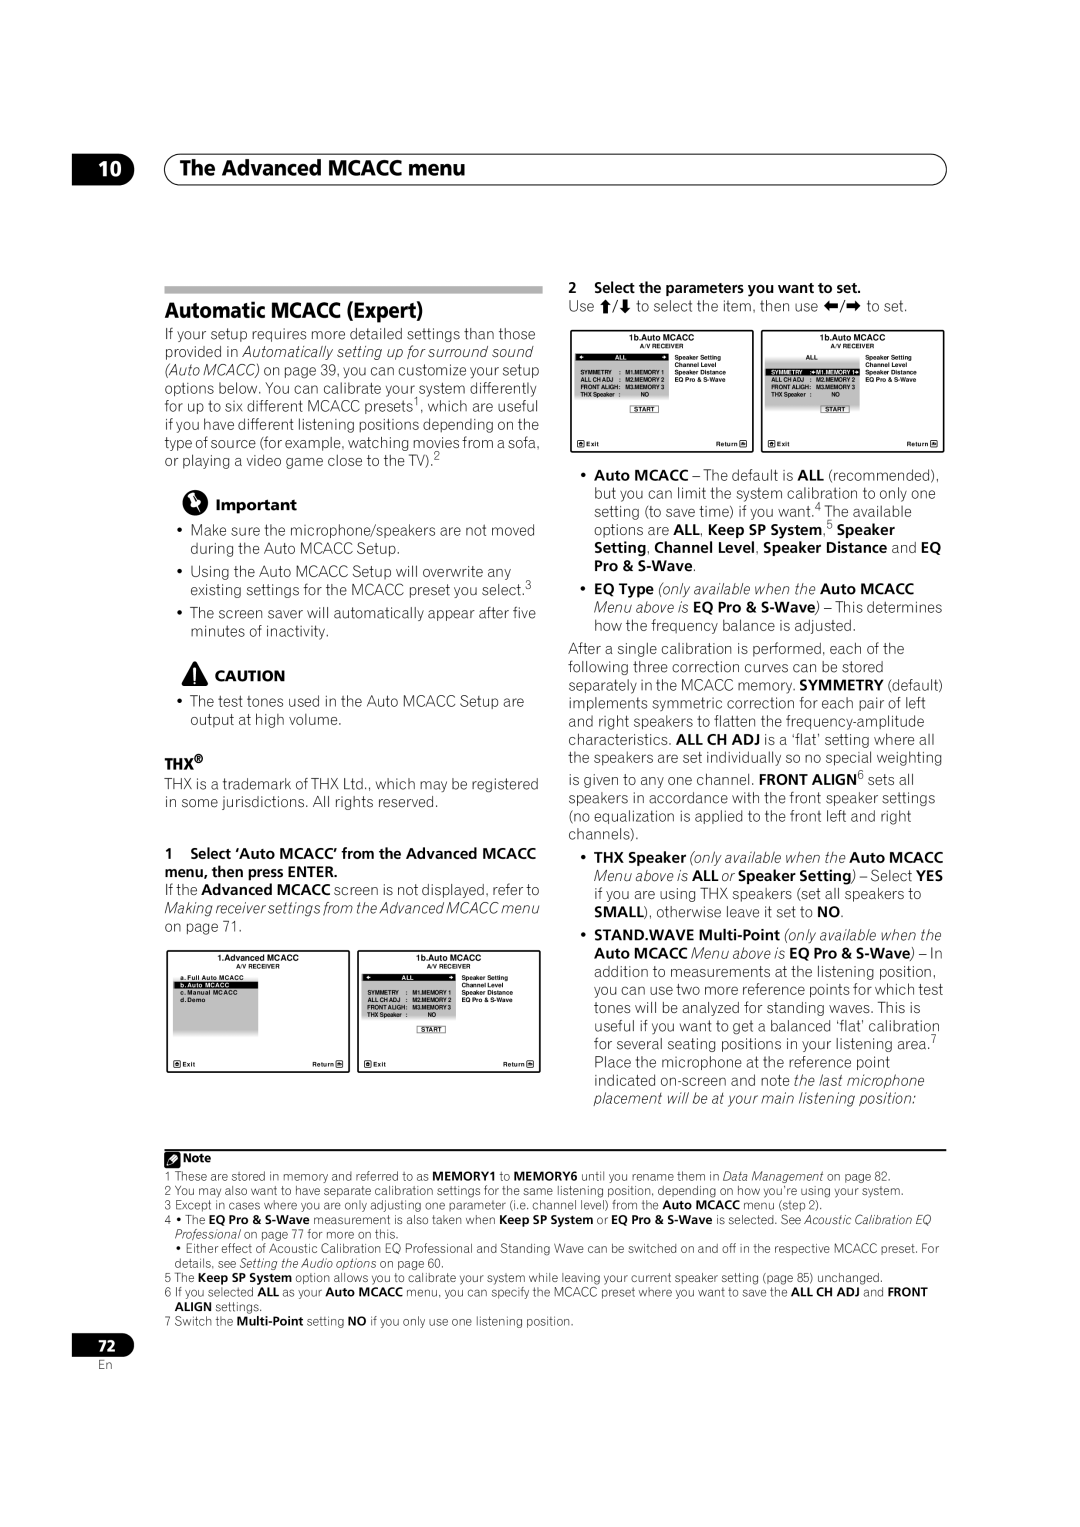 Pioneer VSX-LX52 manual 10The Advanced MCACC menu Automatic MCACC Expert 